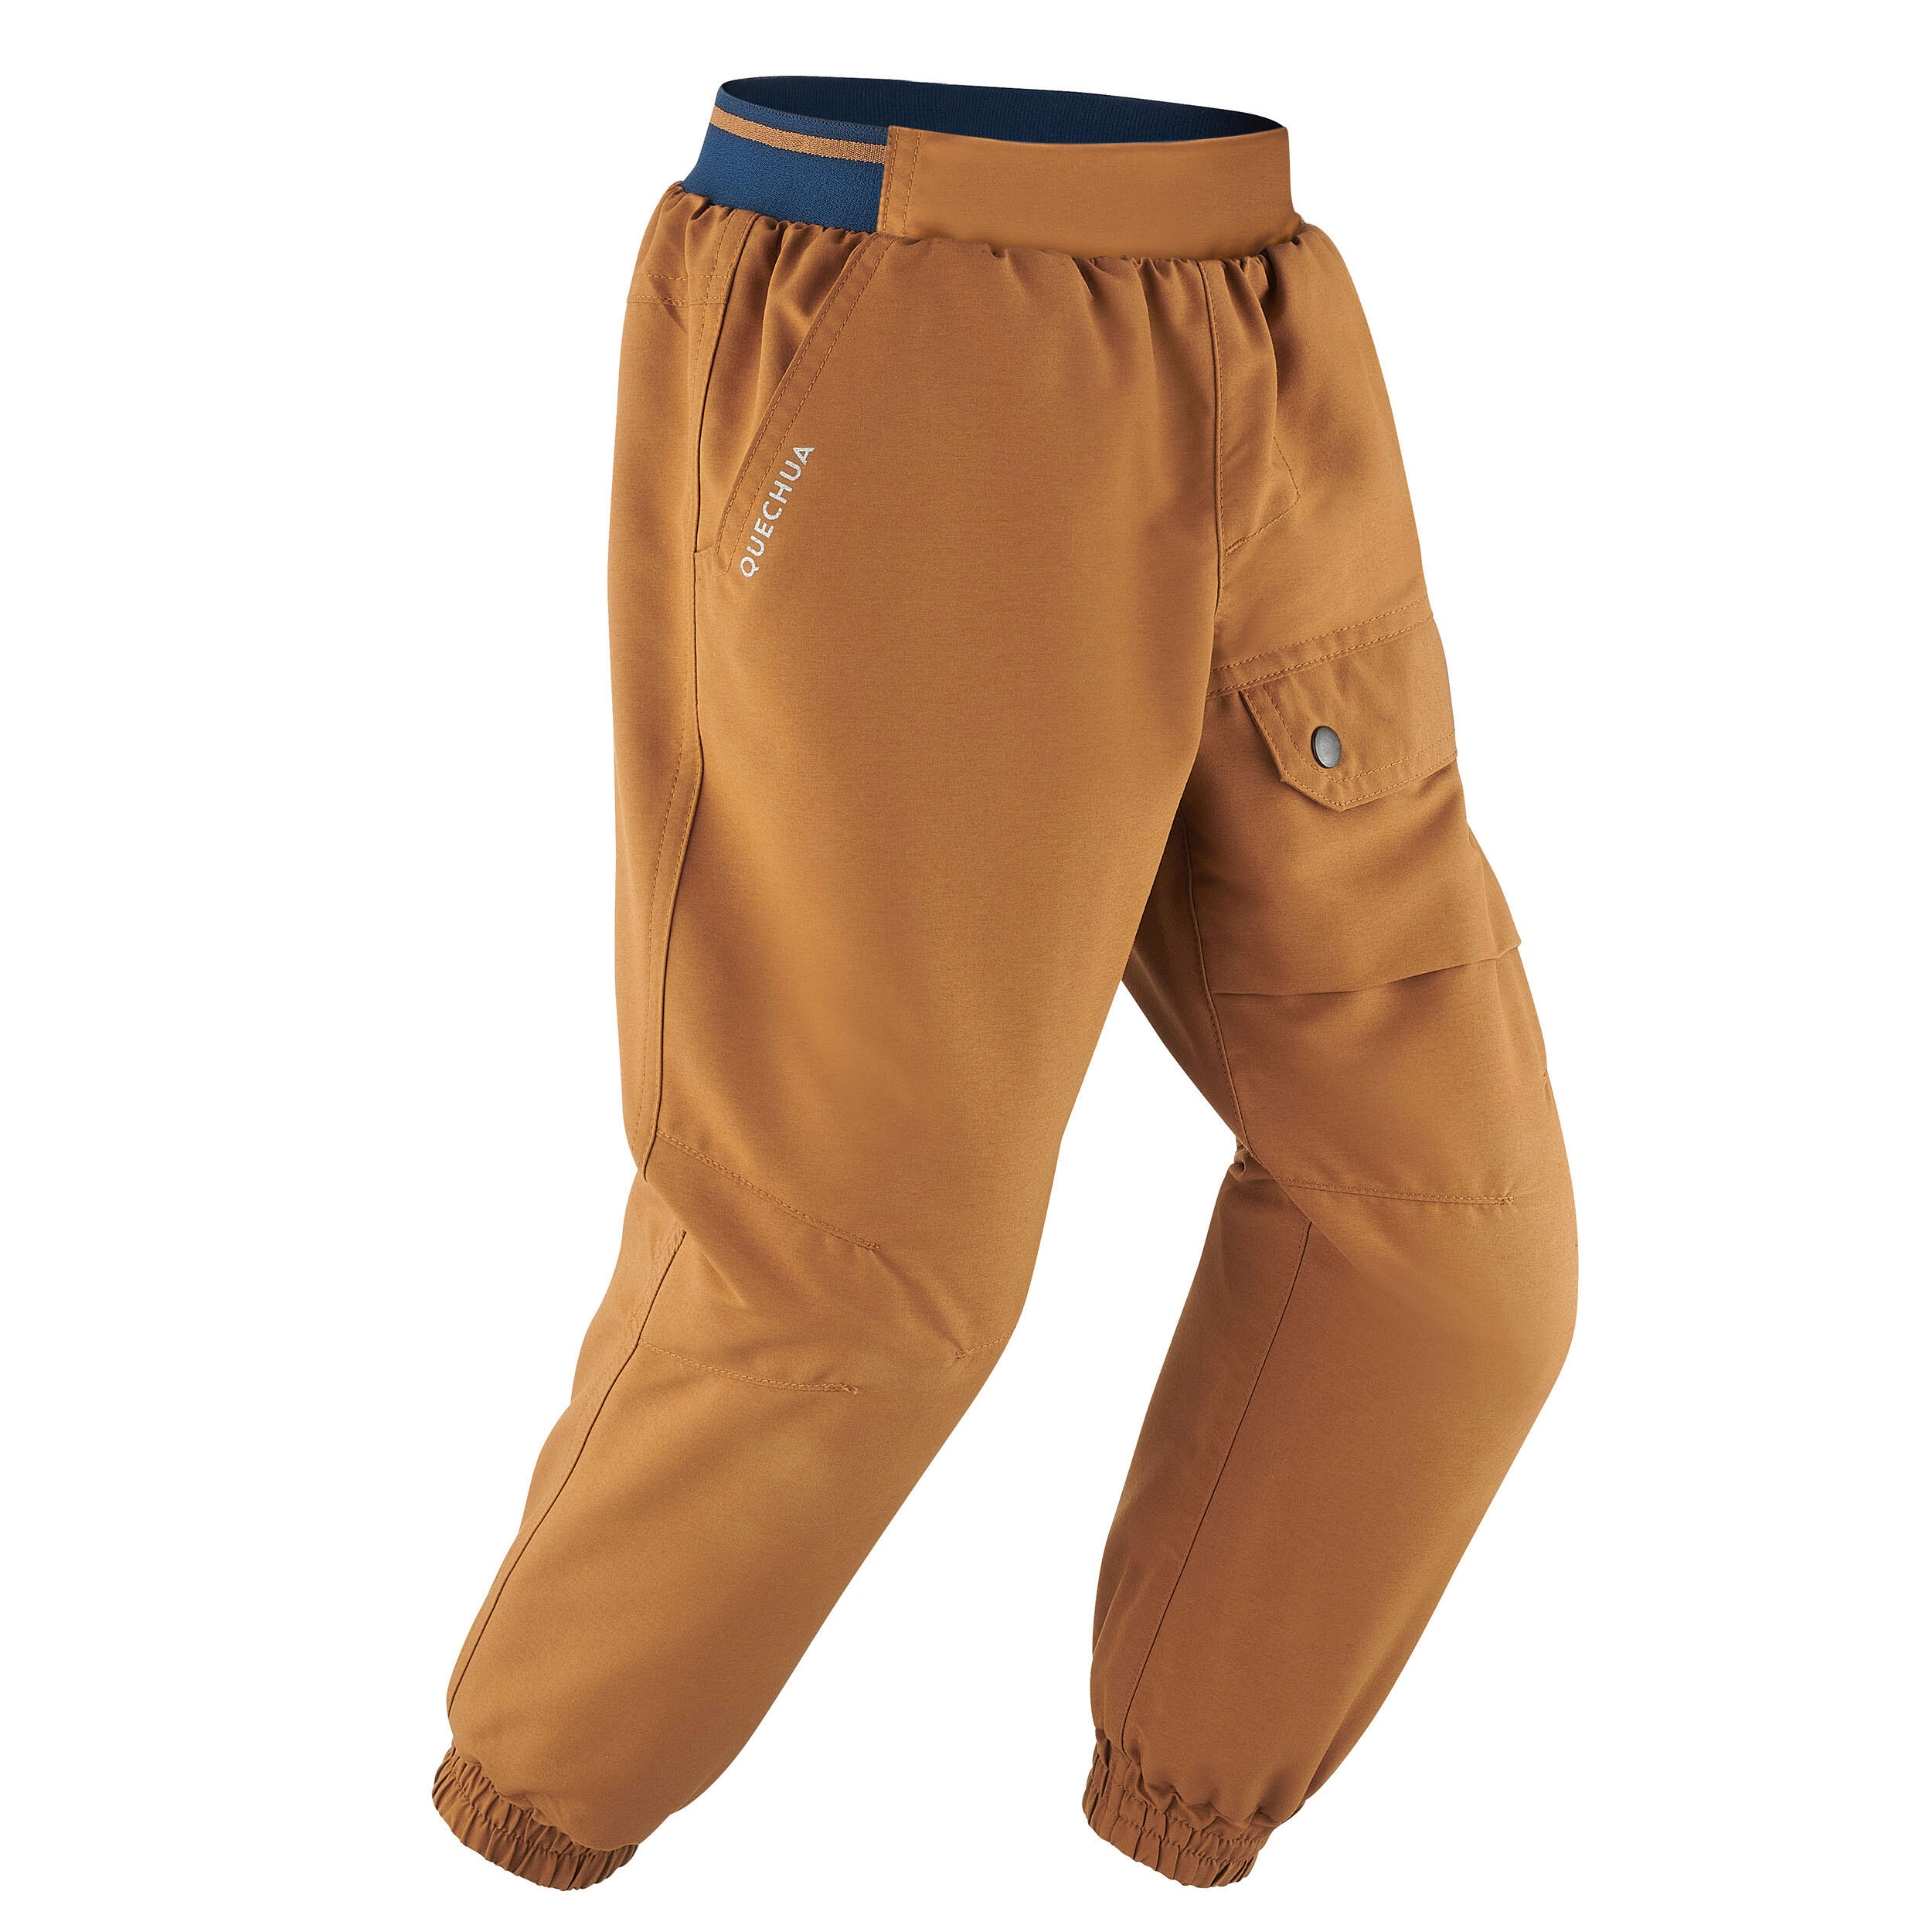 Pantalon Călduros Hidrofob Iarnă/ Drumeție pe Zăpadă SH100 X-Warm Copii 2- 6 ani